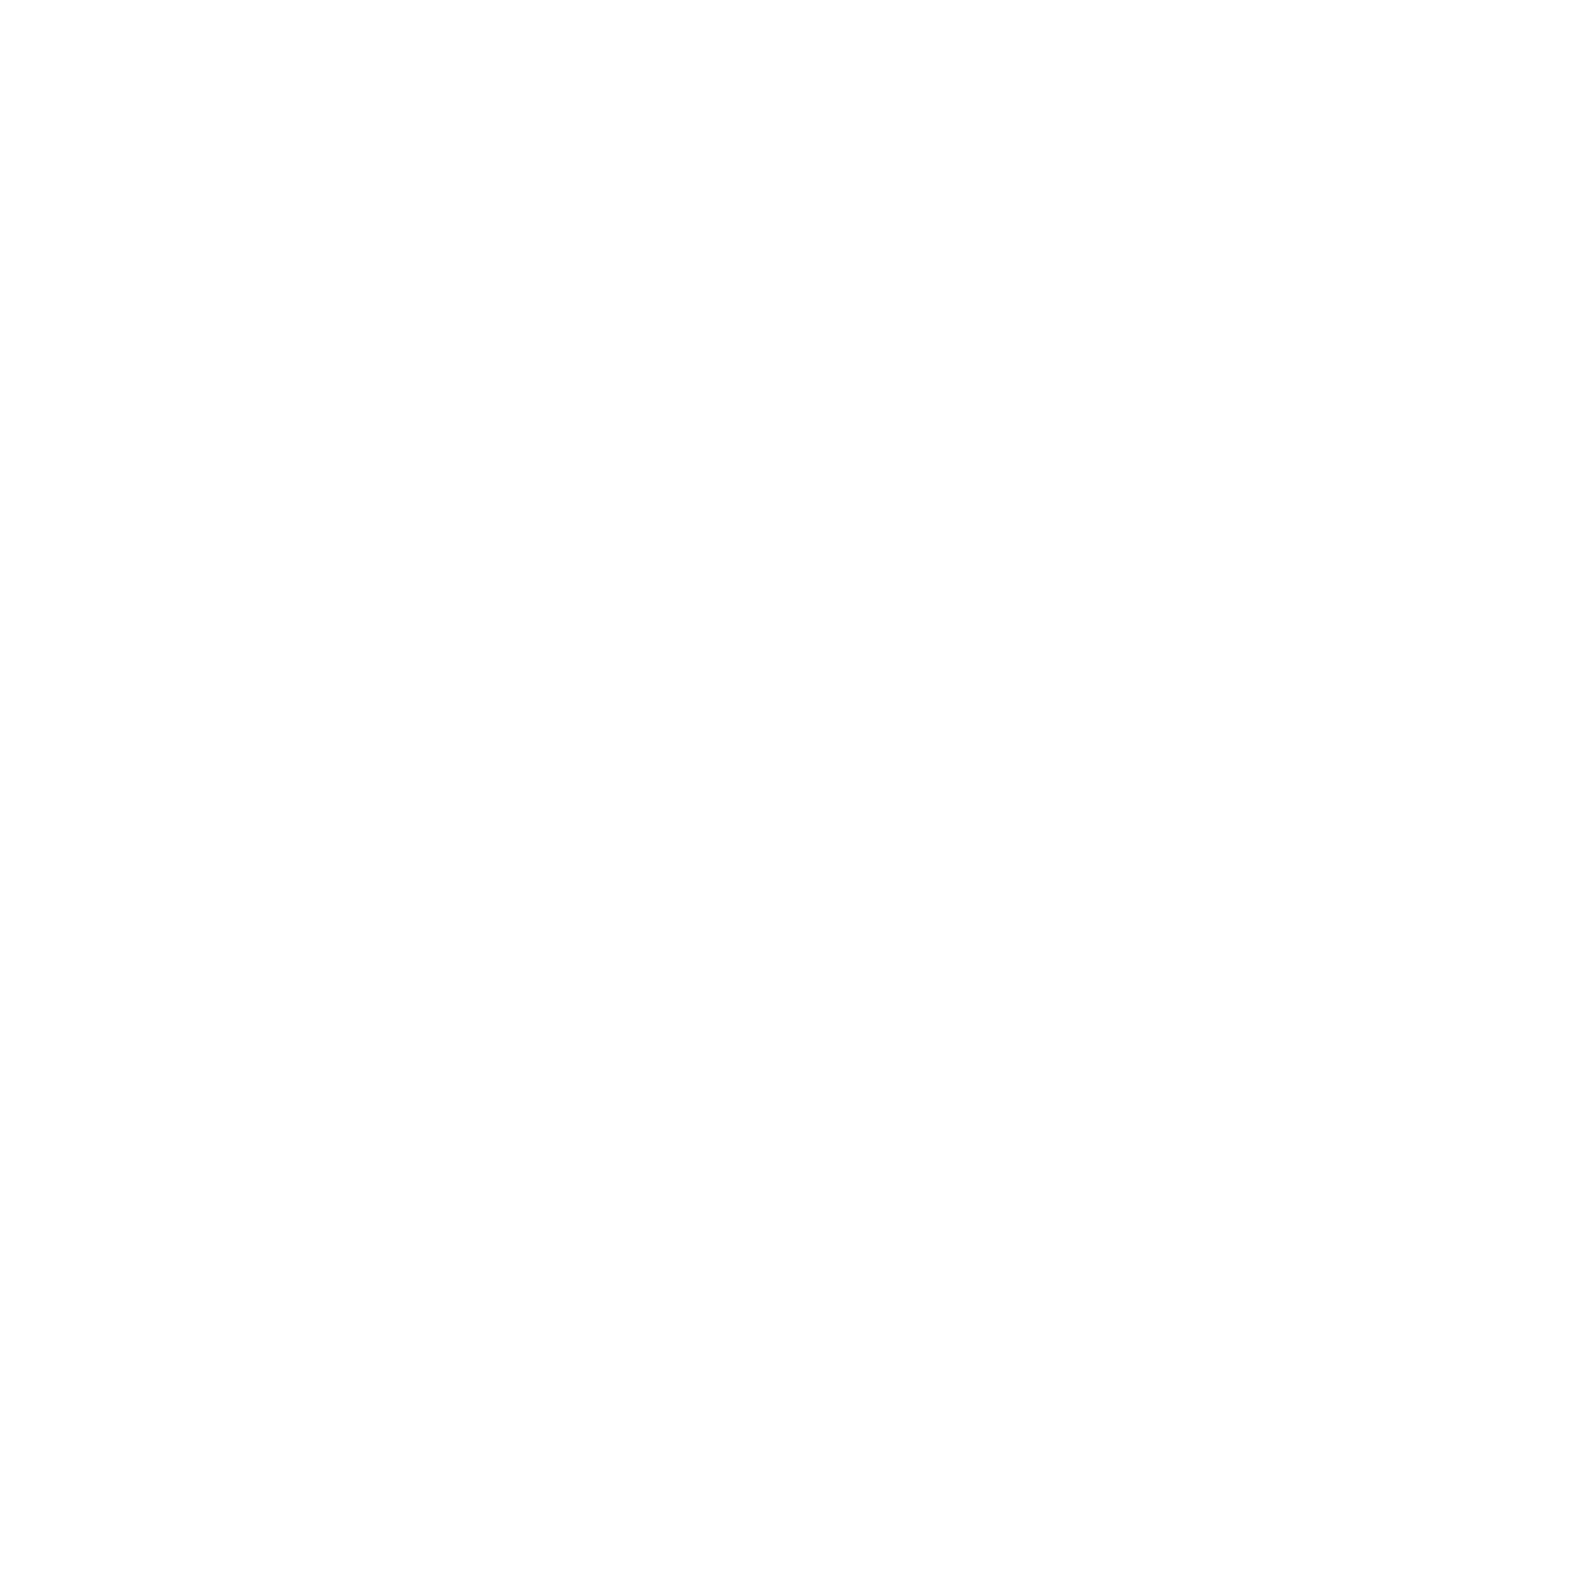 Atlassian logo for dark backgrounds (transparent PNG)